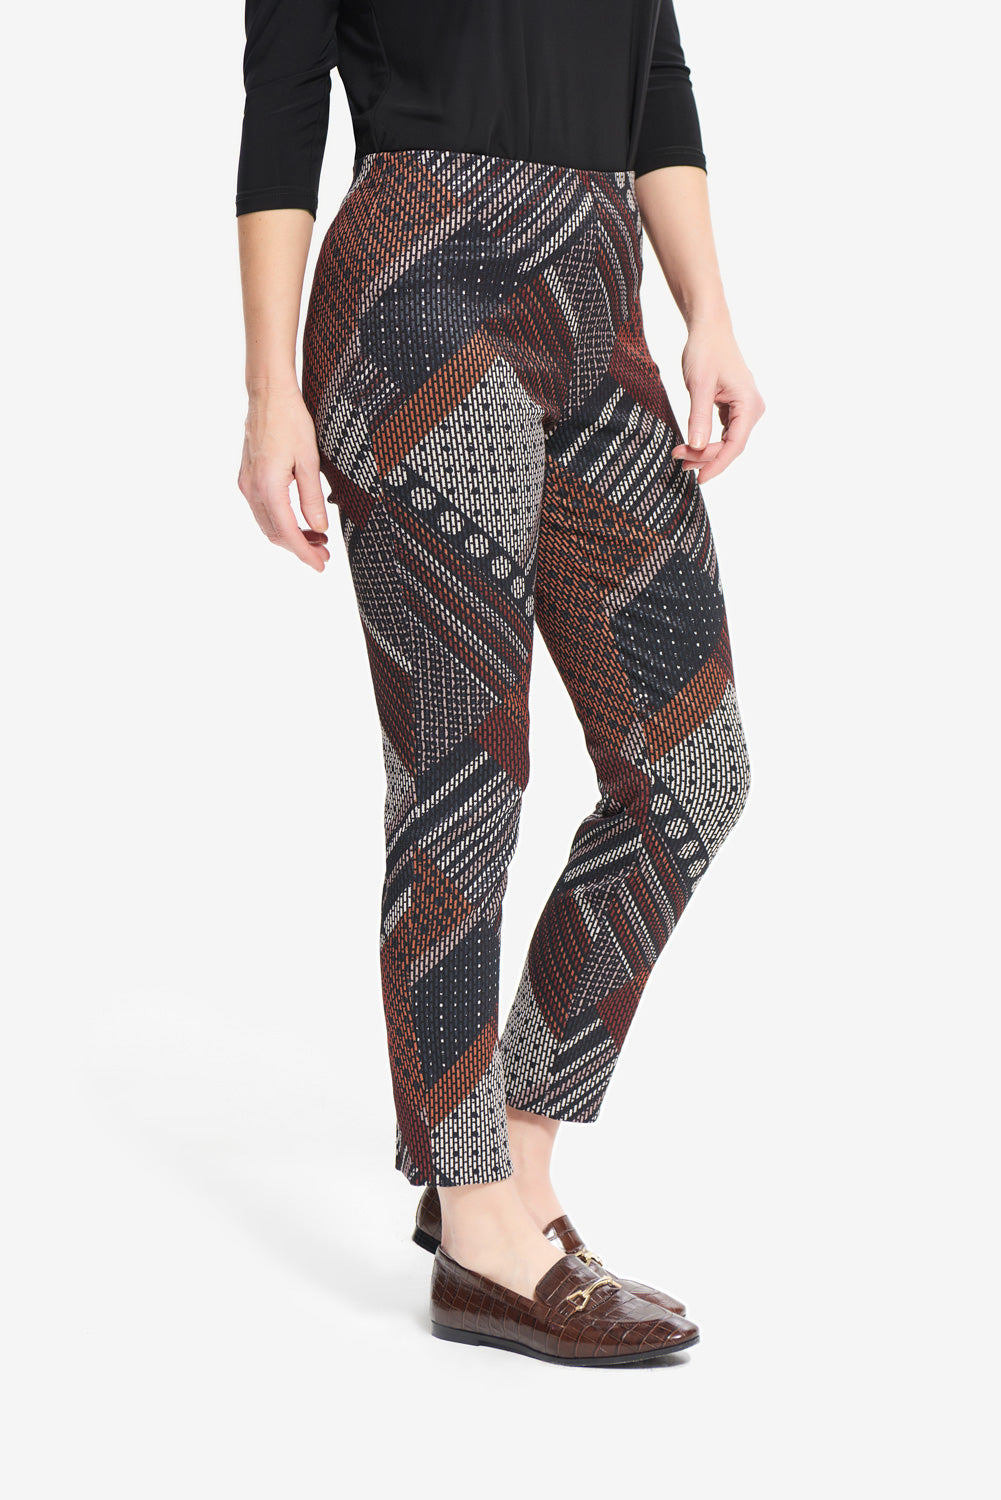 Joseph Ribkoff Black-Multi Geometric Pants Style 214257